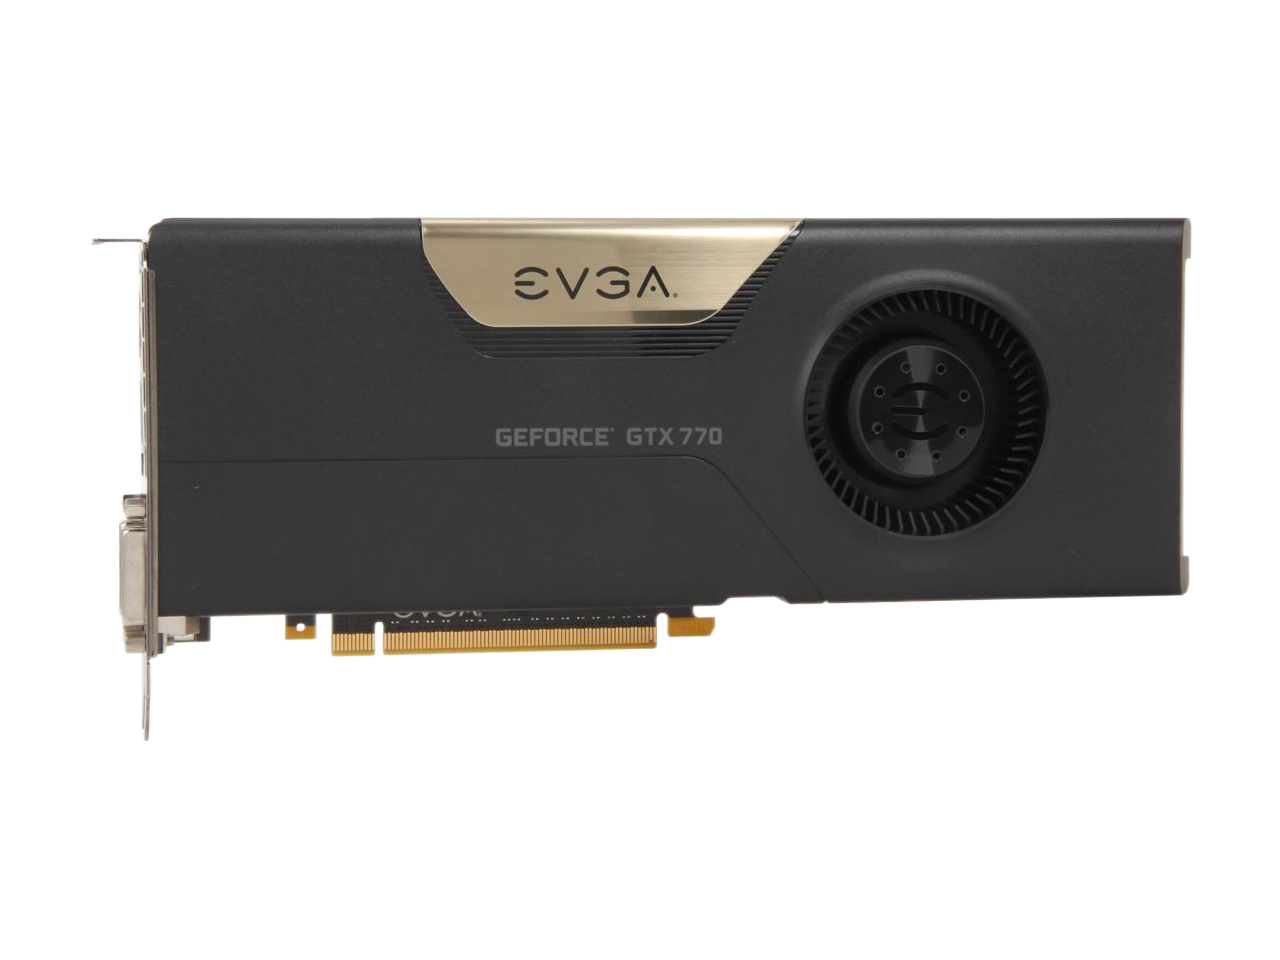 EVGA GeForce GTX 770 2GB 256-Bit GDDR5 G-SYNC Support  PCI Express 3.0 SLI Support Video Card 02G-P4-2770-KR